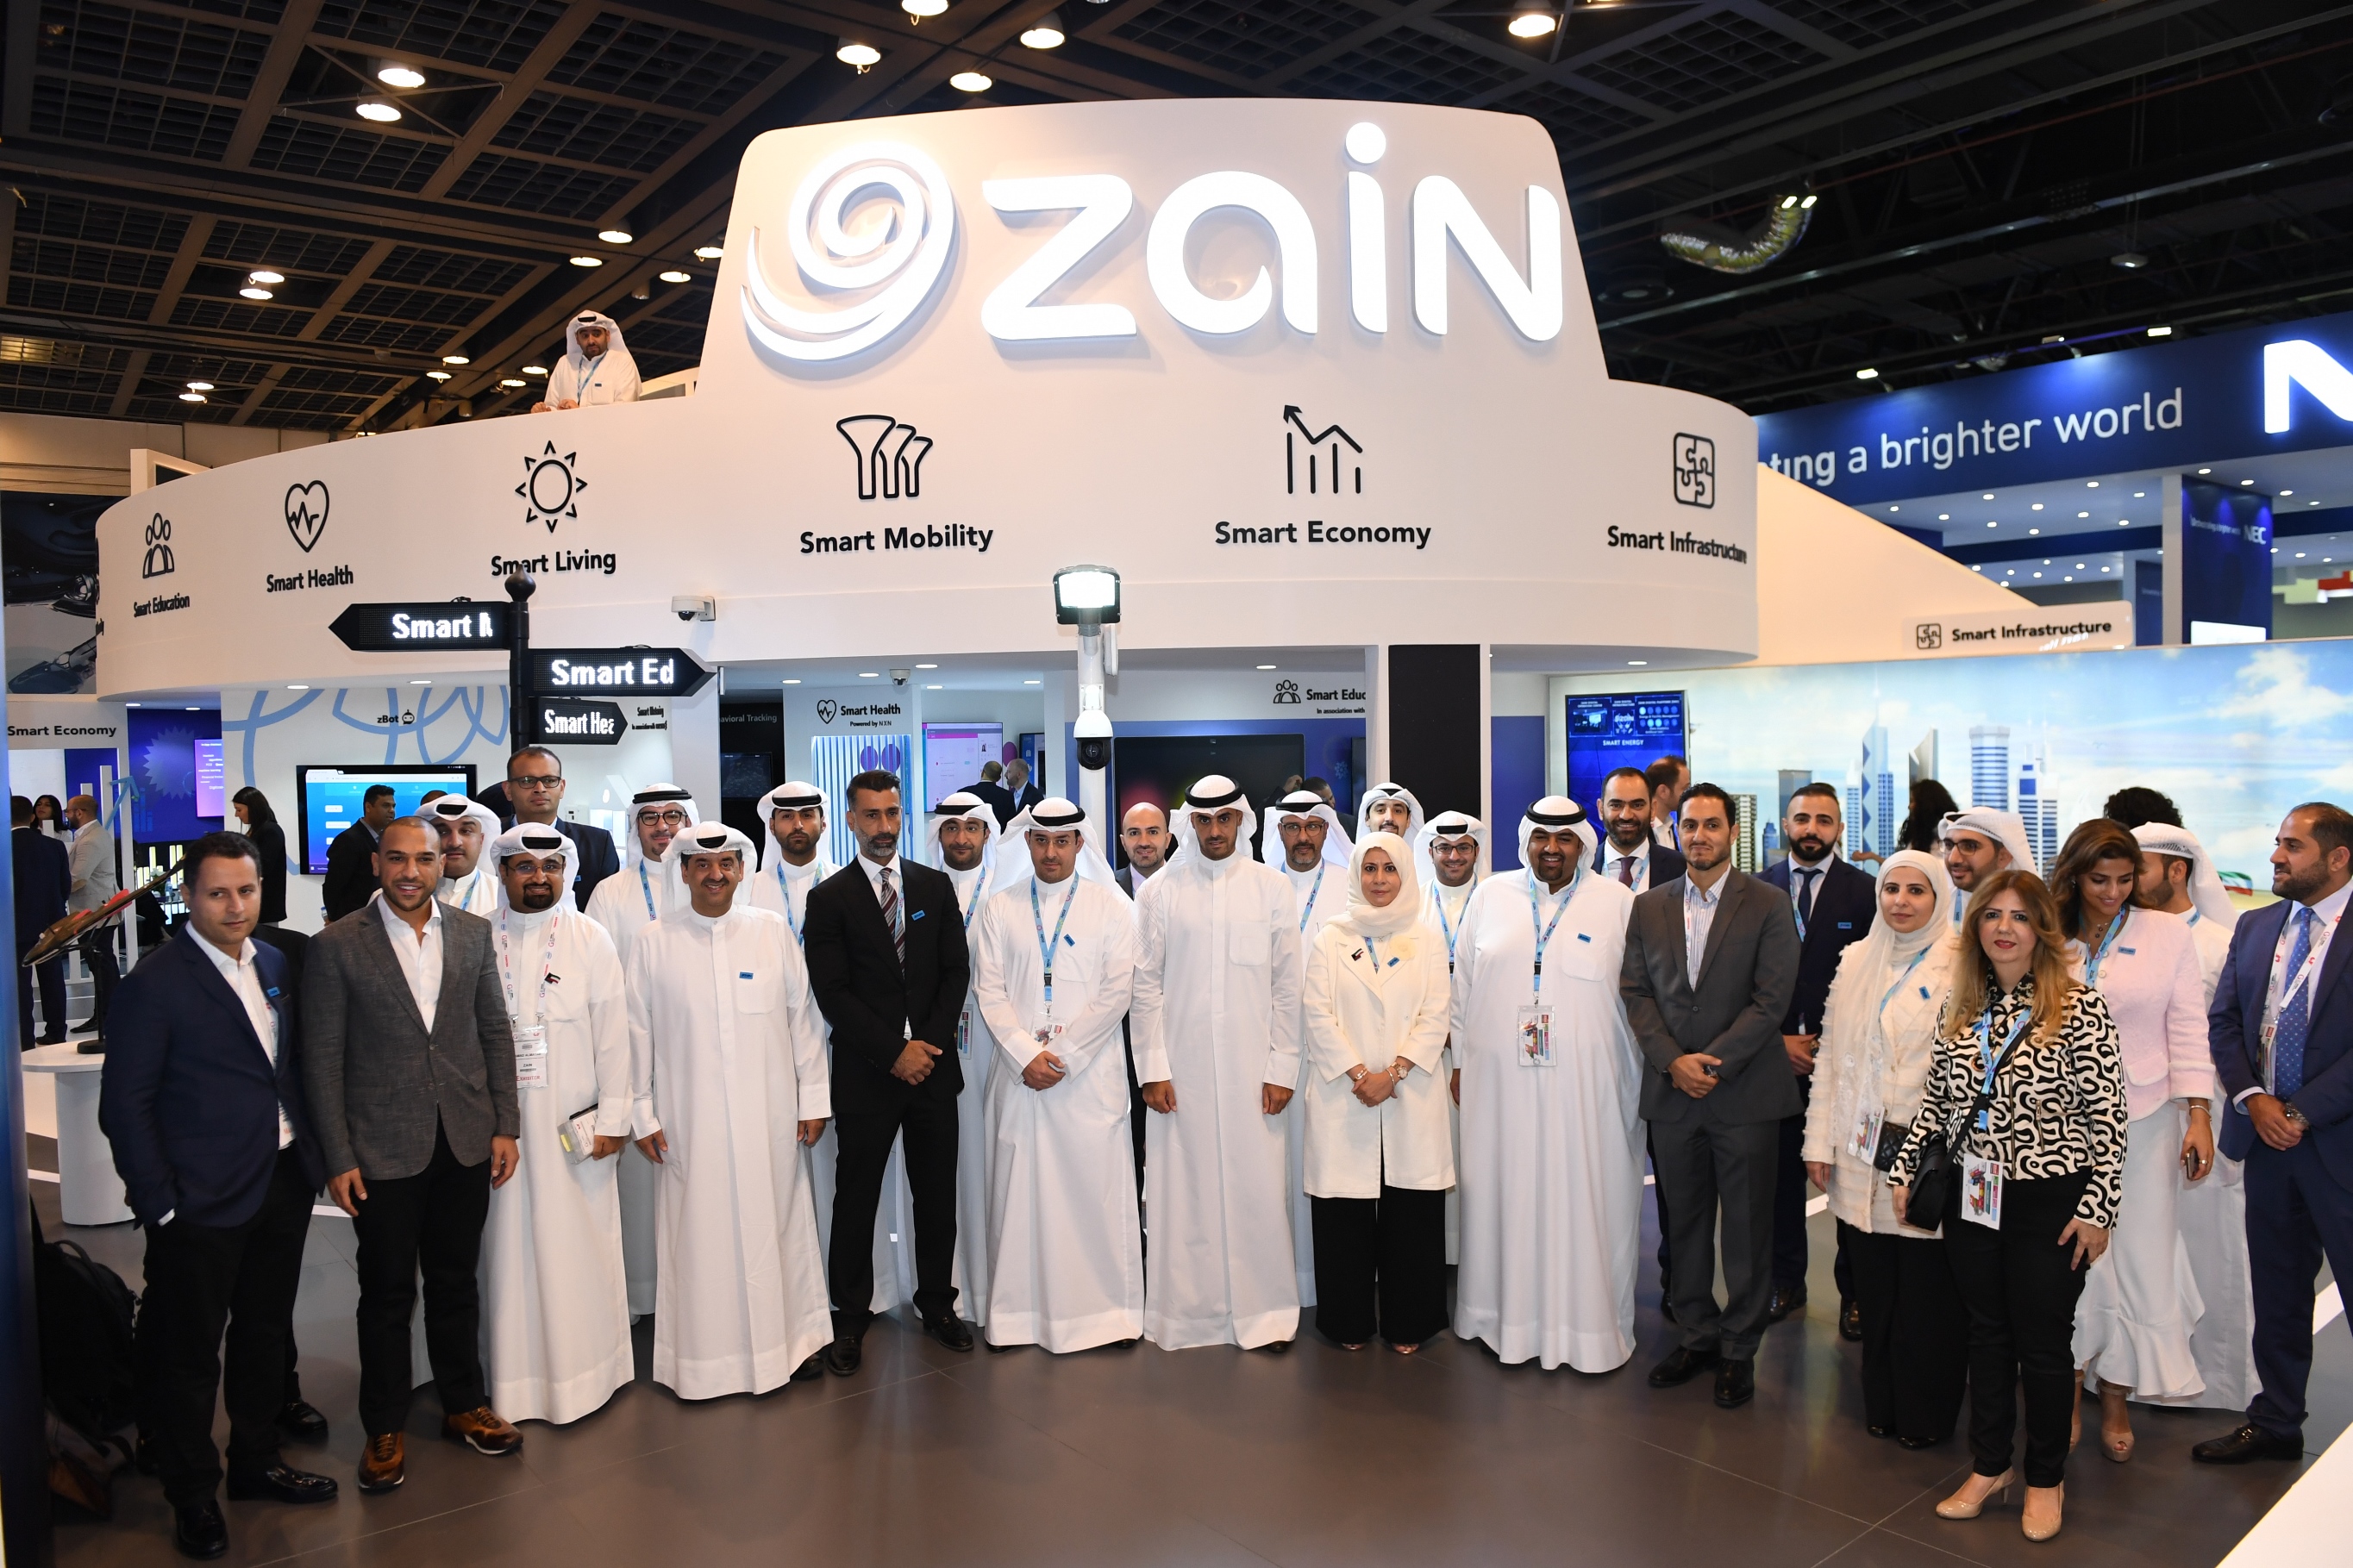 Zain showcases its digital capabilities at GITEX, advocating “New Kuwait” vision 